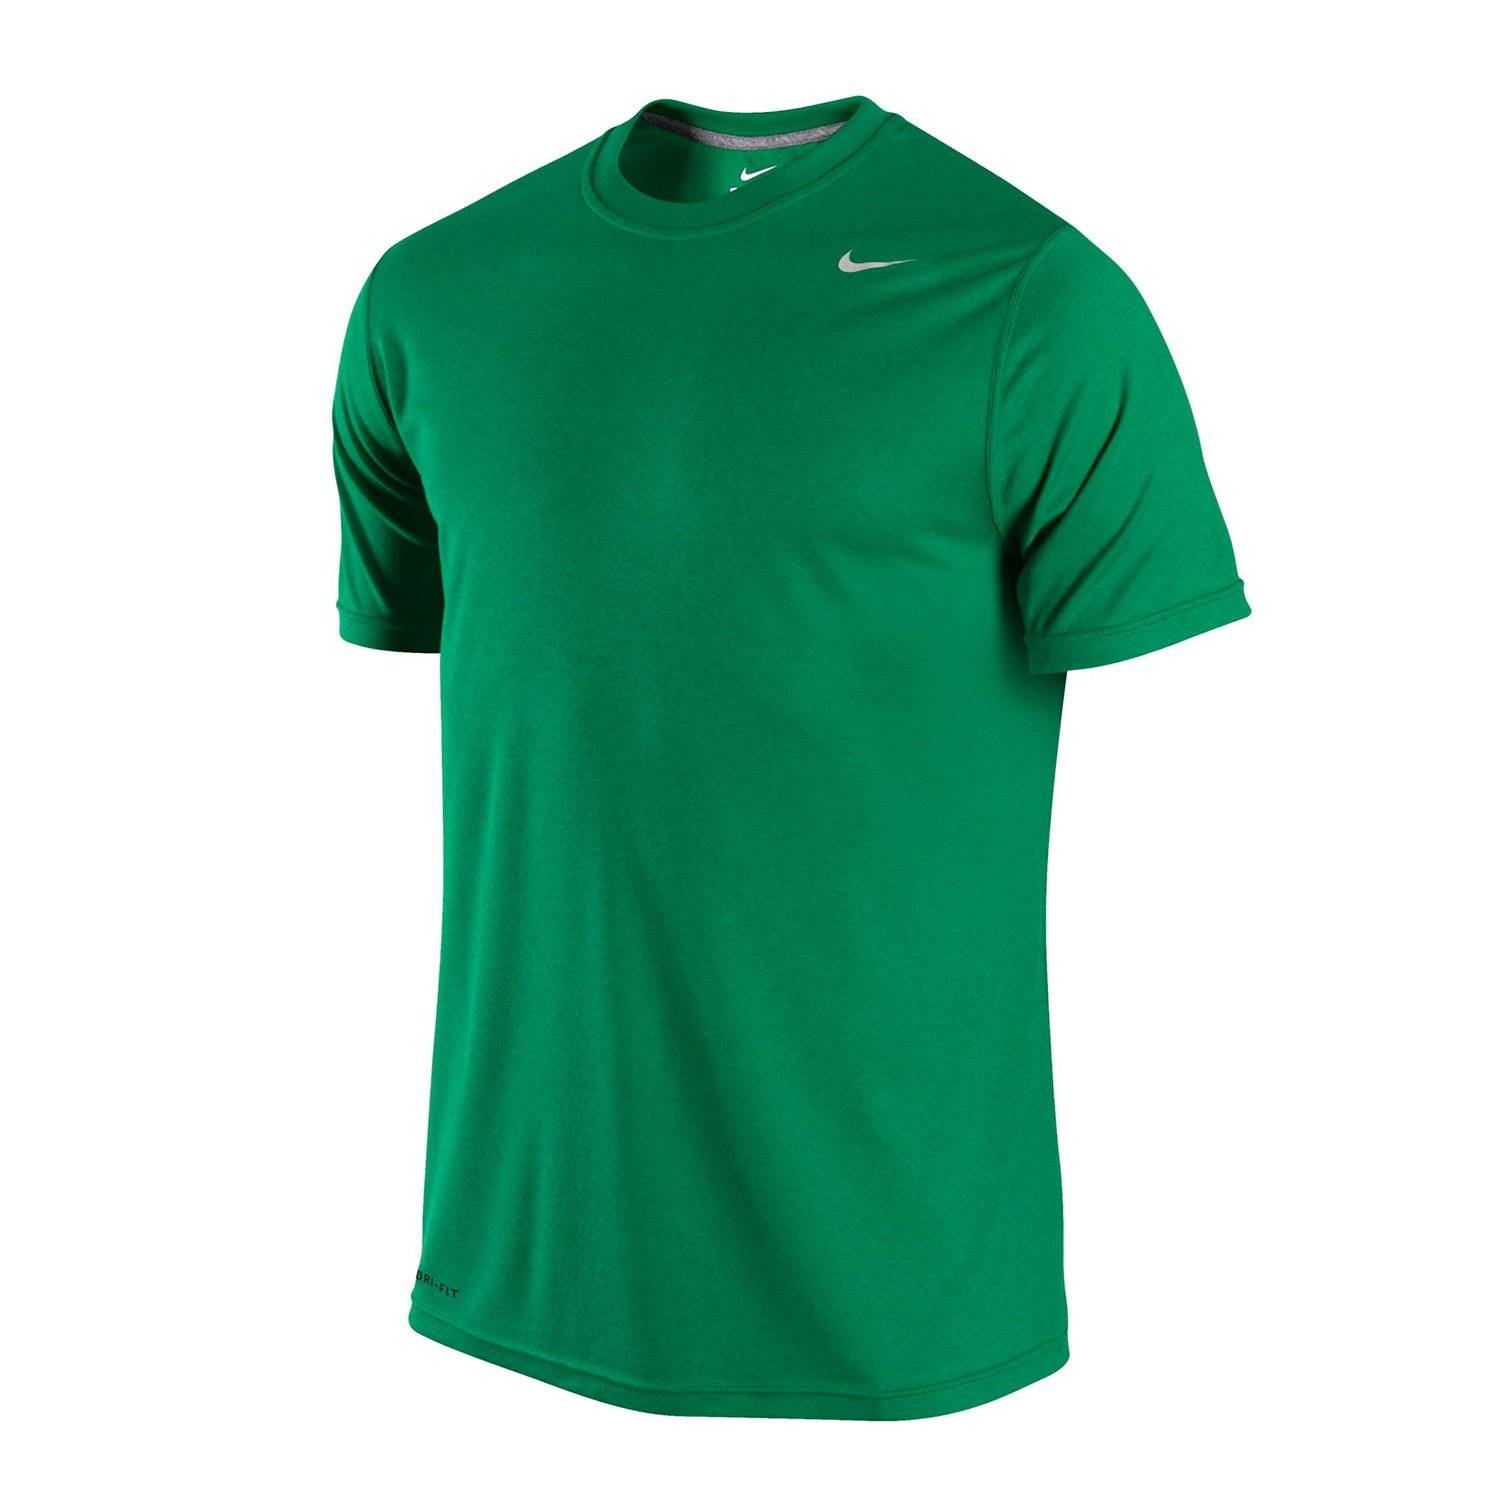 Nike Legend Dri-FIT Polyester Training Shirt